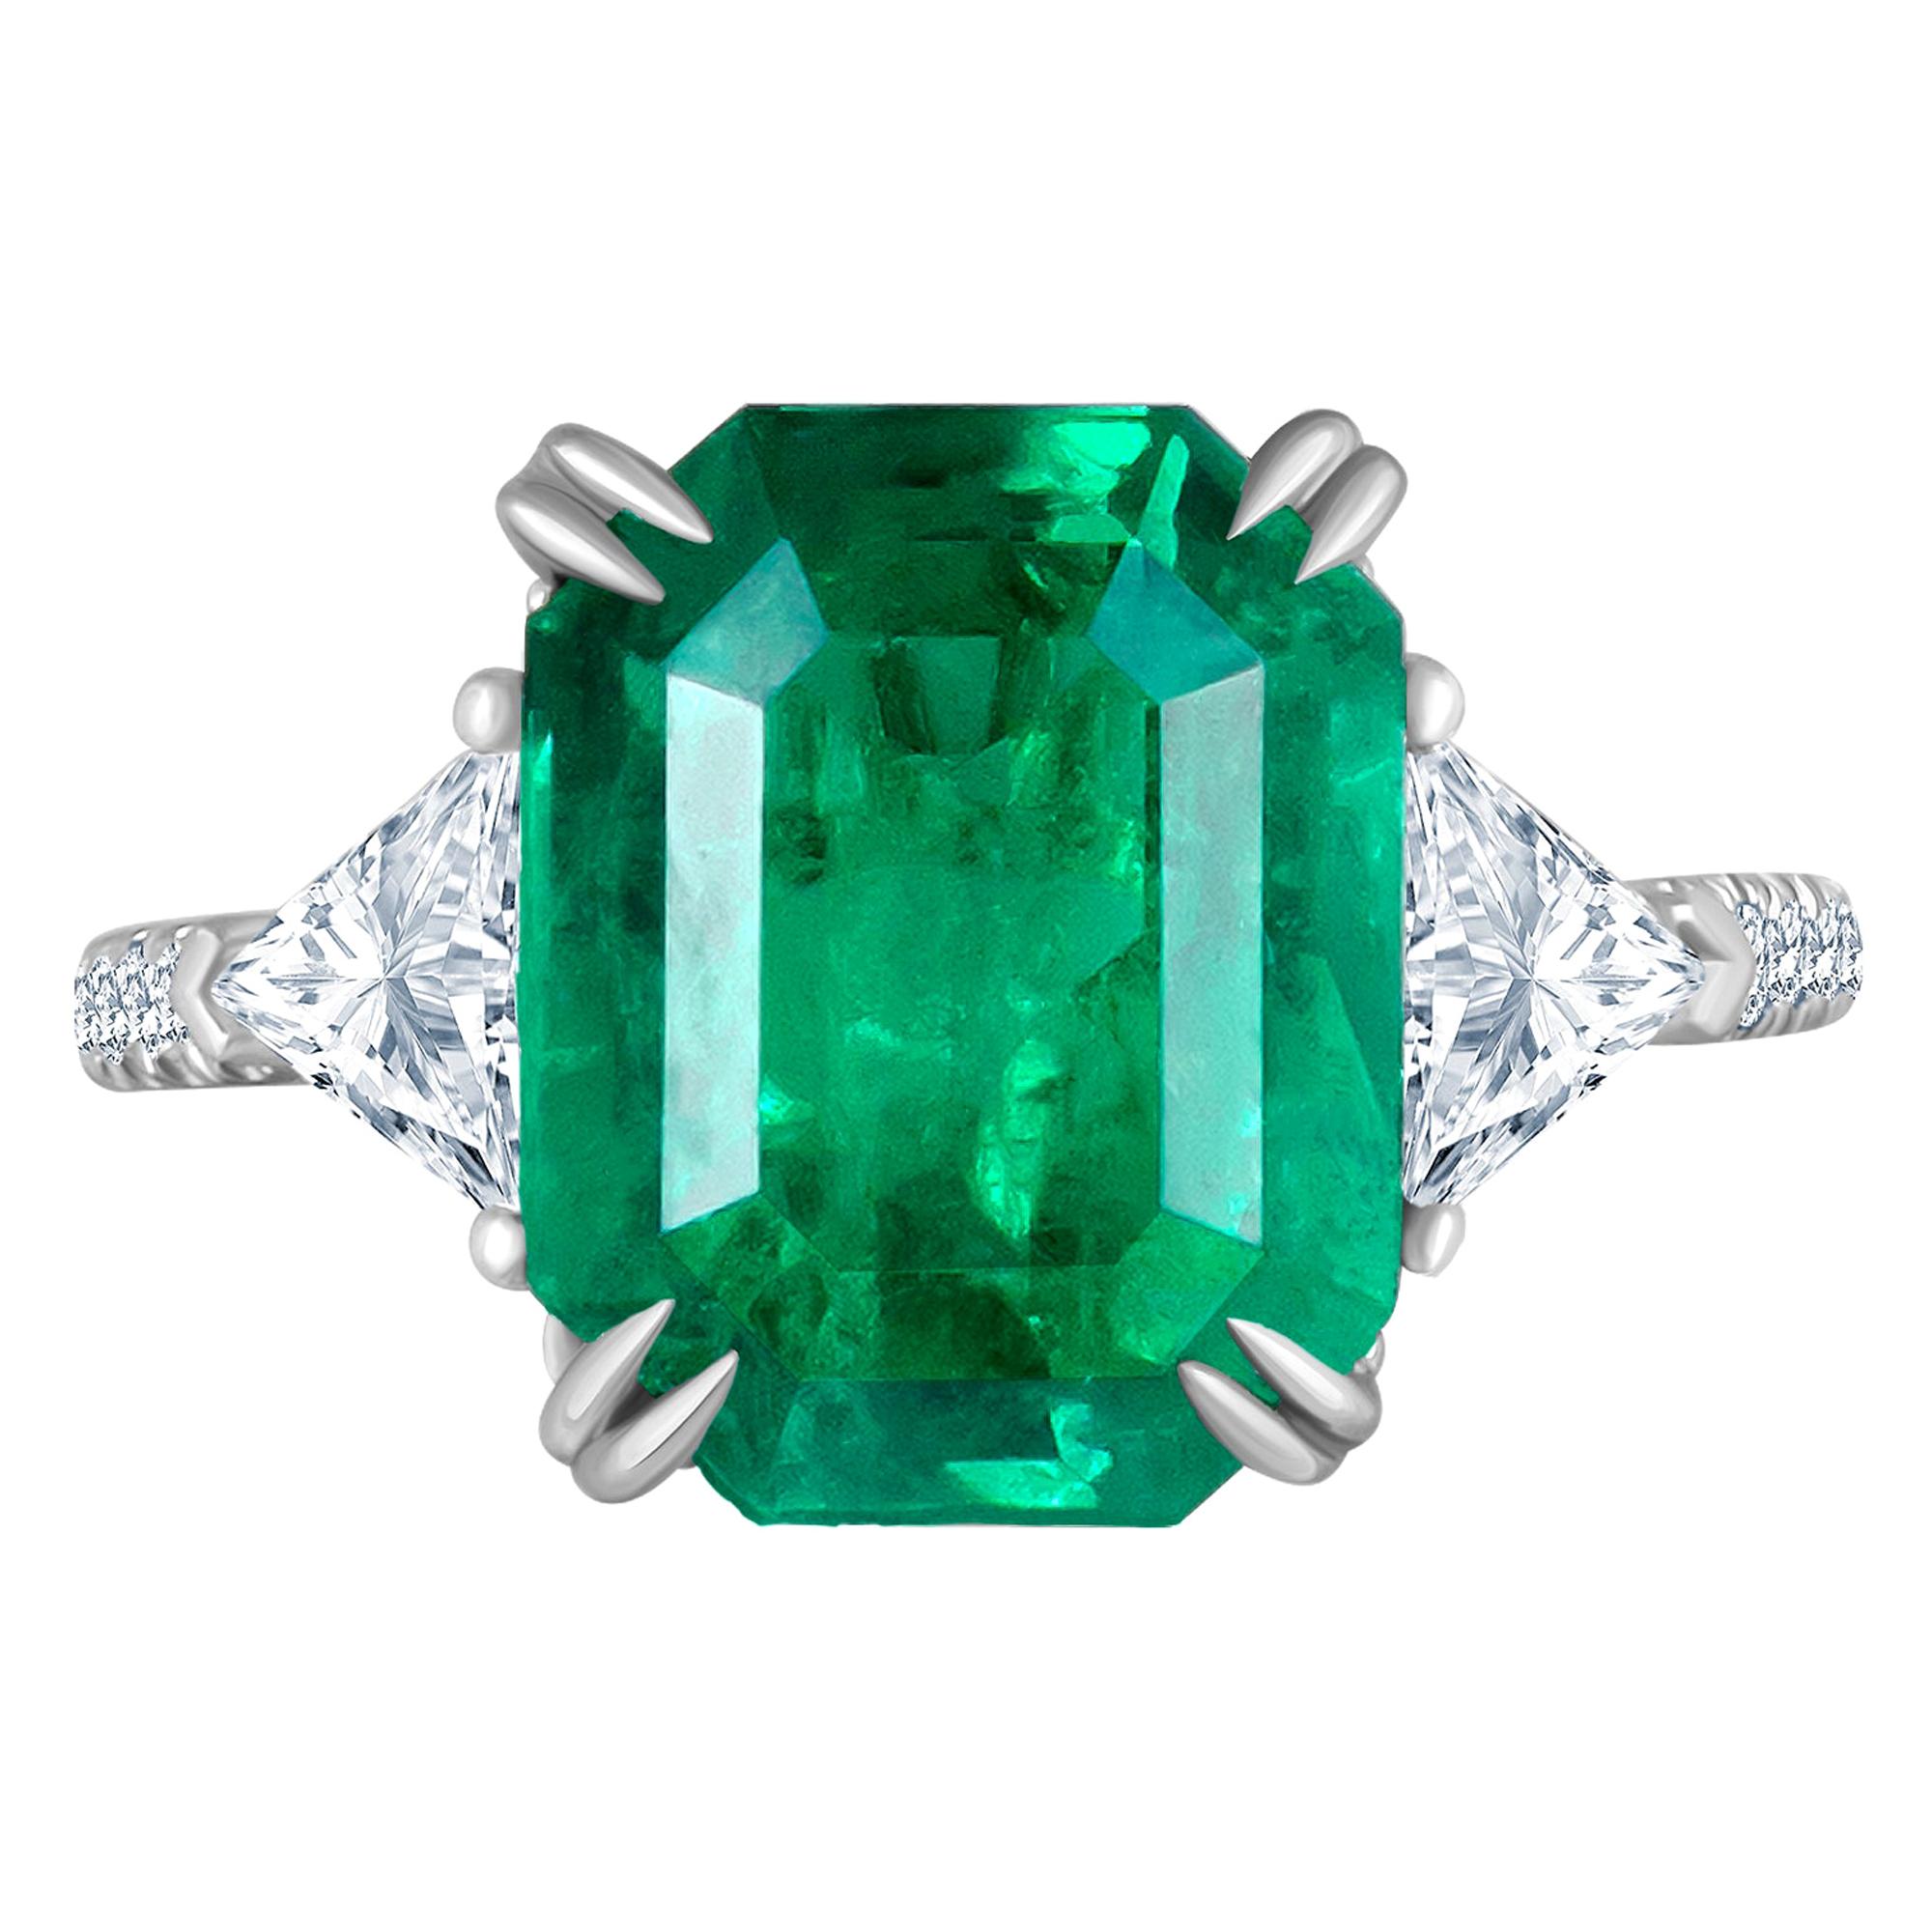 Emilio Jewelry Certified 6.33 Carat Genuine Colombian Emerald Diamond Ring